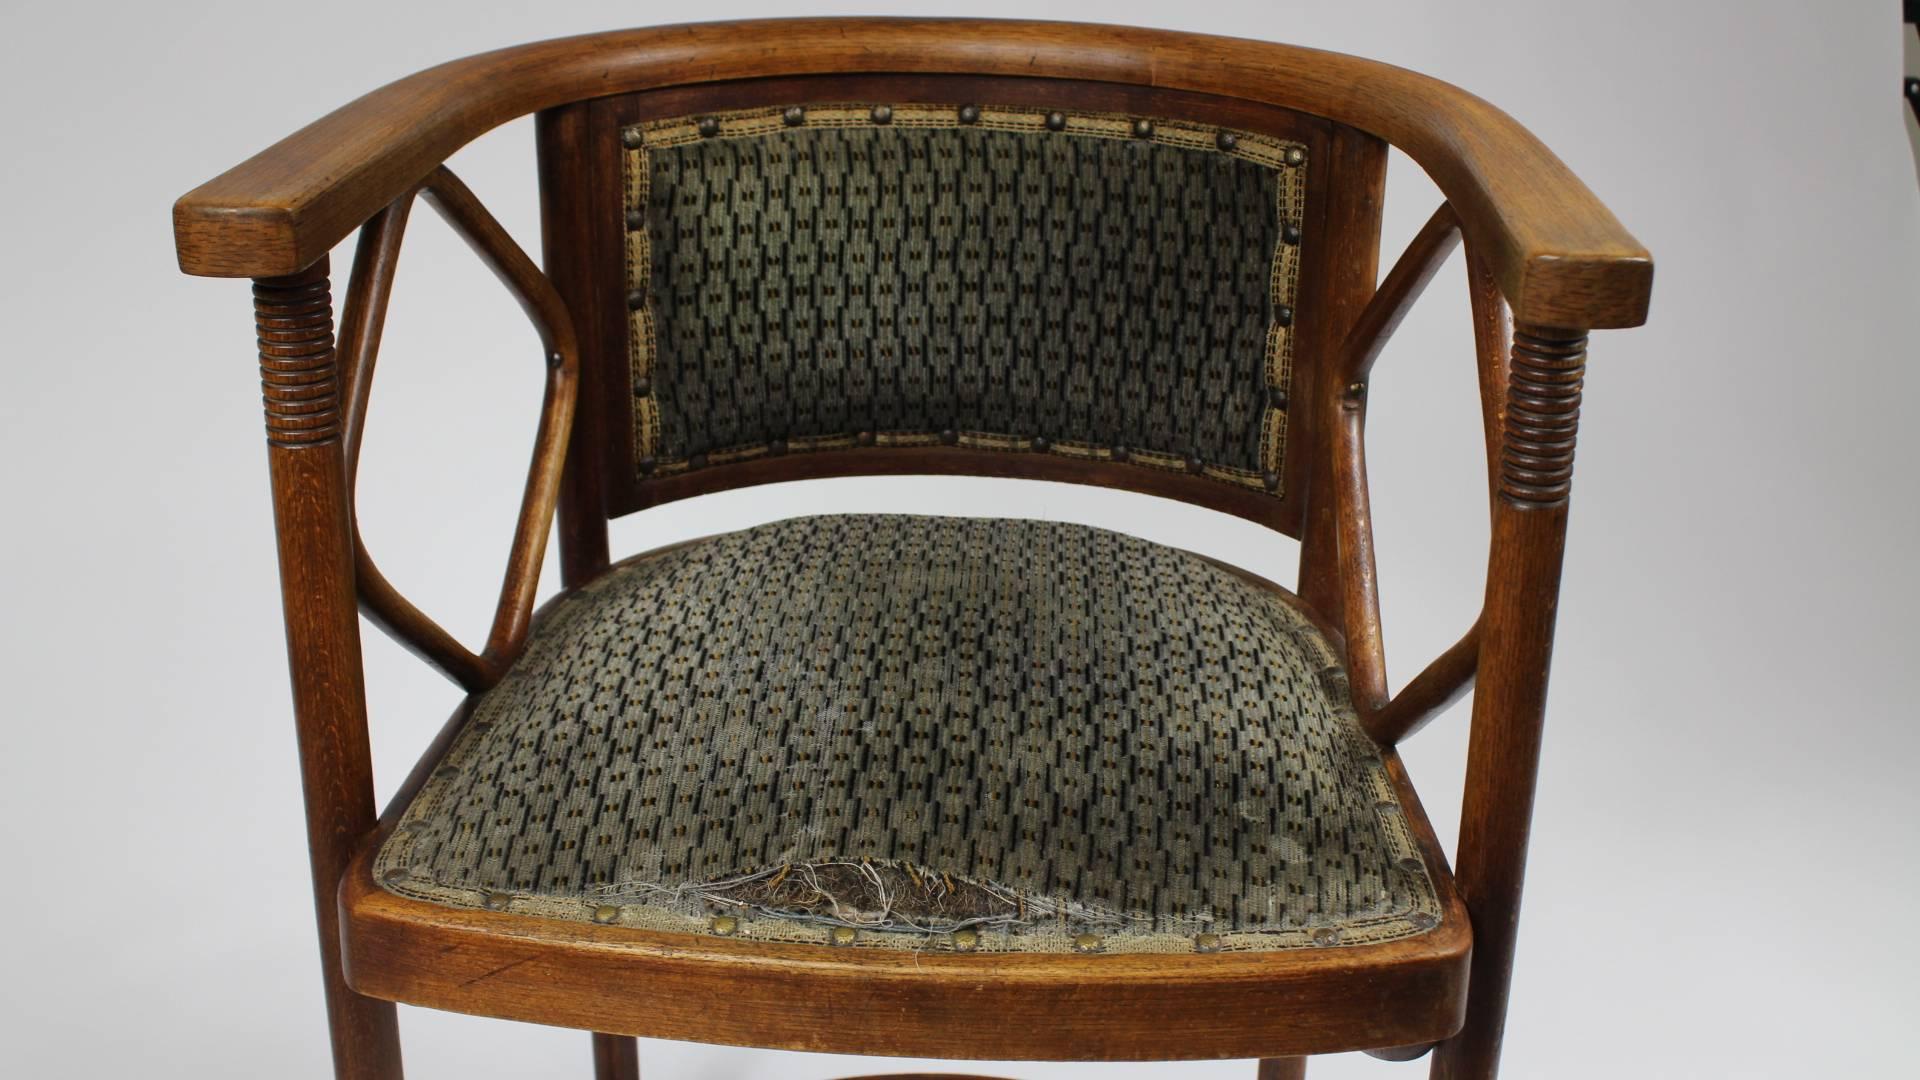 Austrian Josef Hoffmann Fledermaus Chair, Model No. 728, J. & J. Kohn 1913